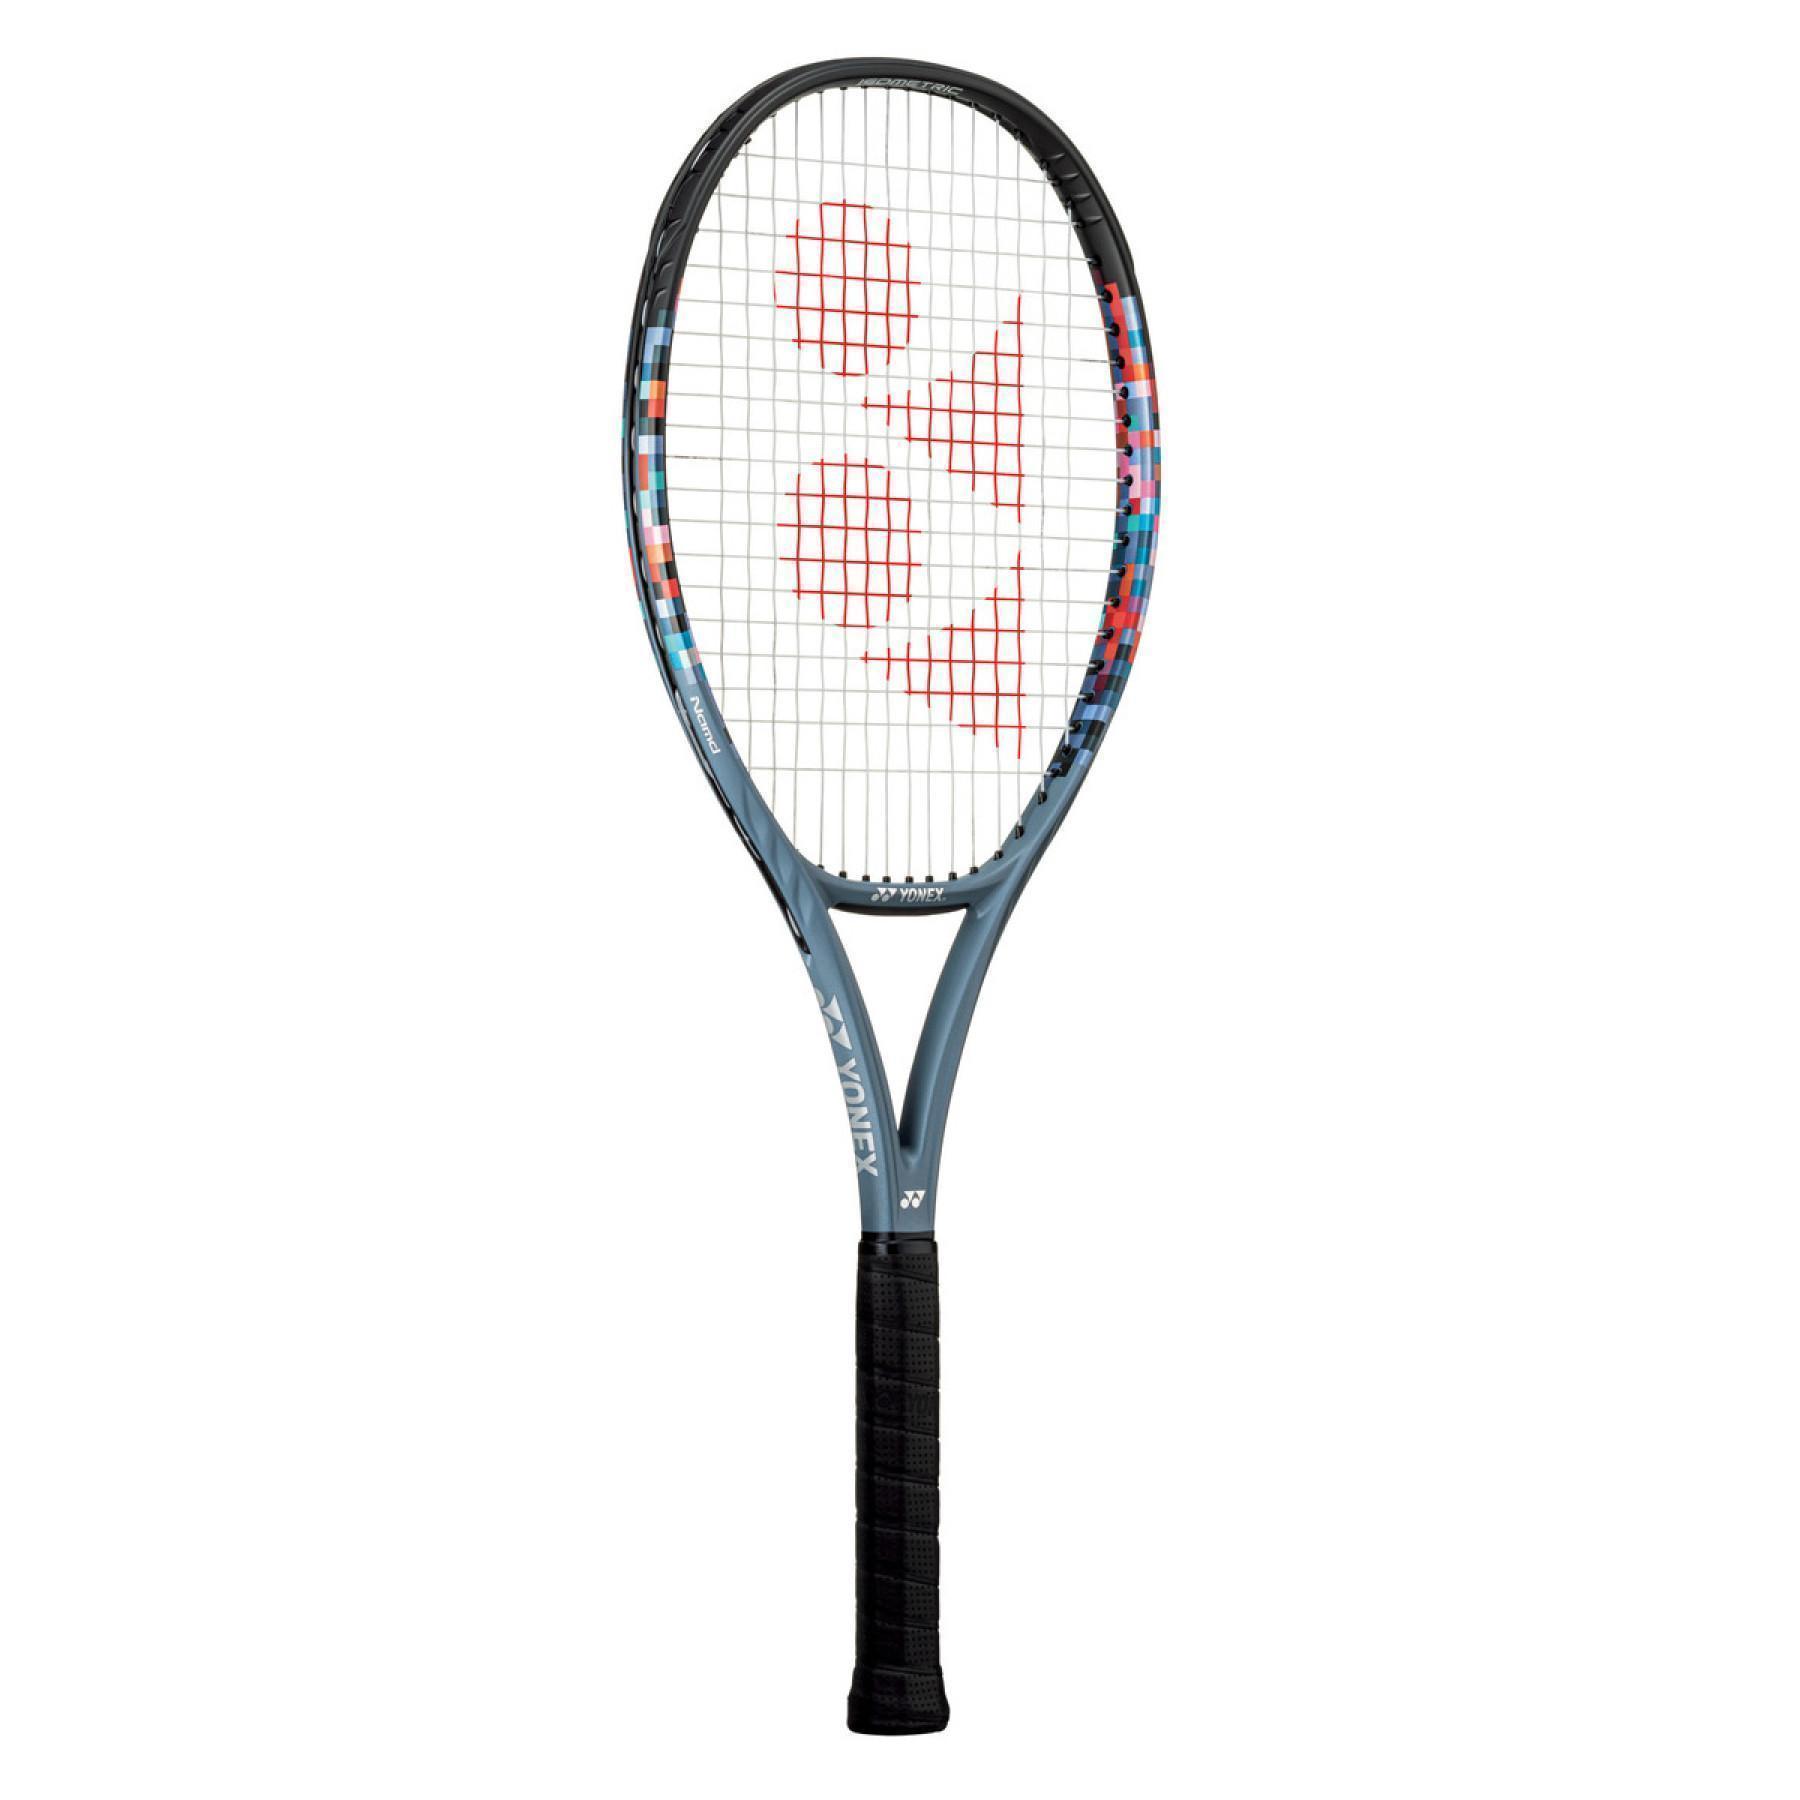 Tennis racket Yonex Vcore 98 limited